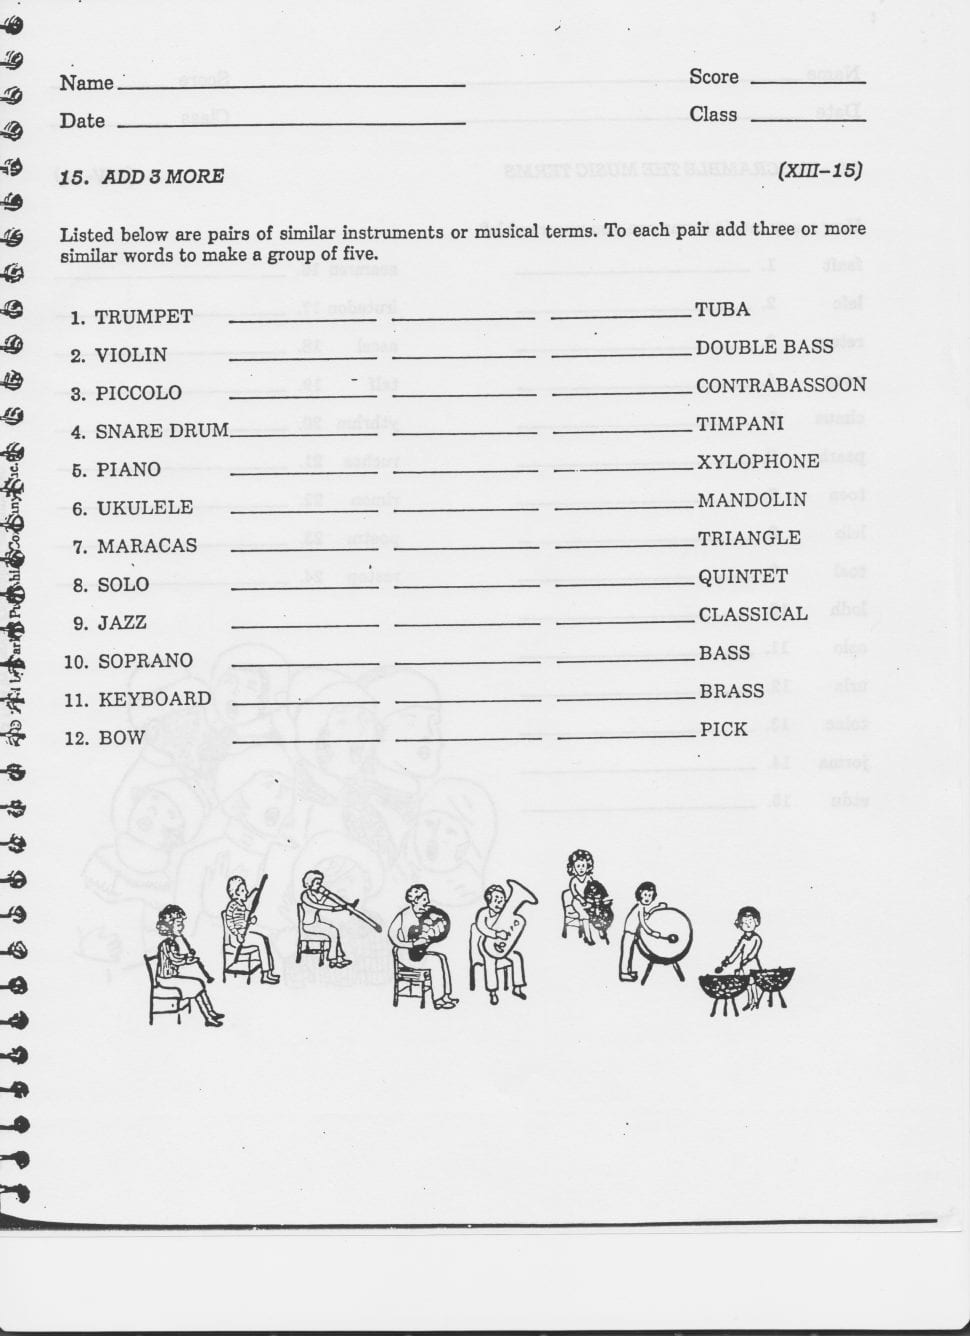 1St Grade Reading Comprehension Worksheets Multiple Choice